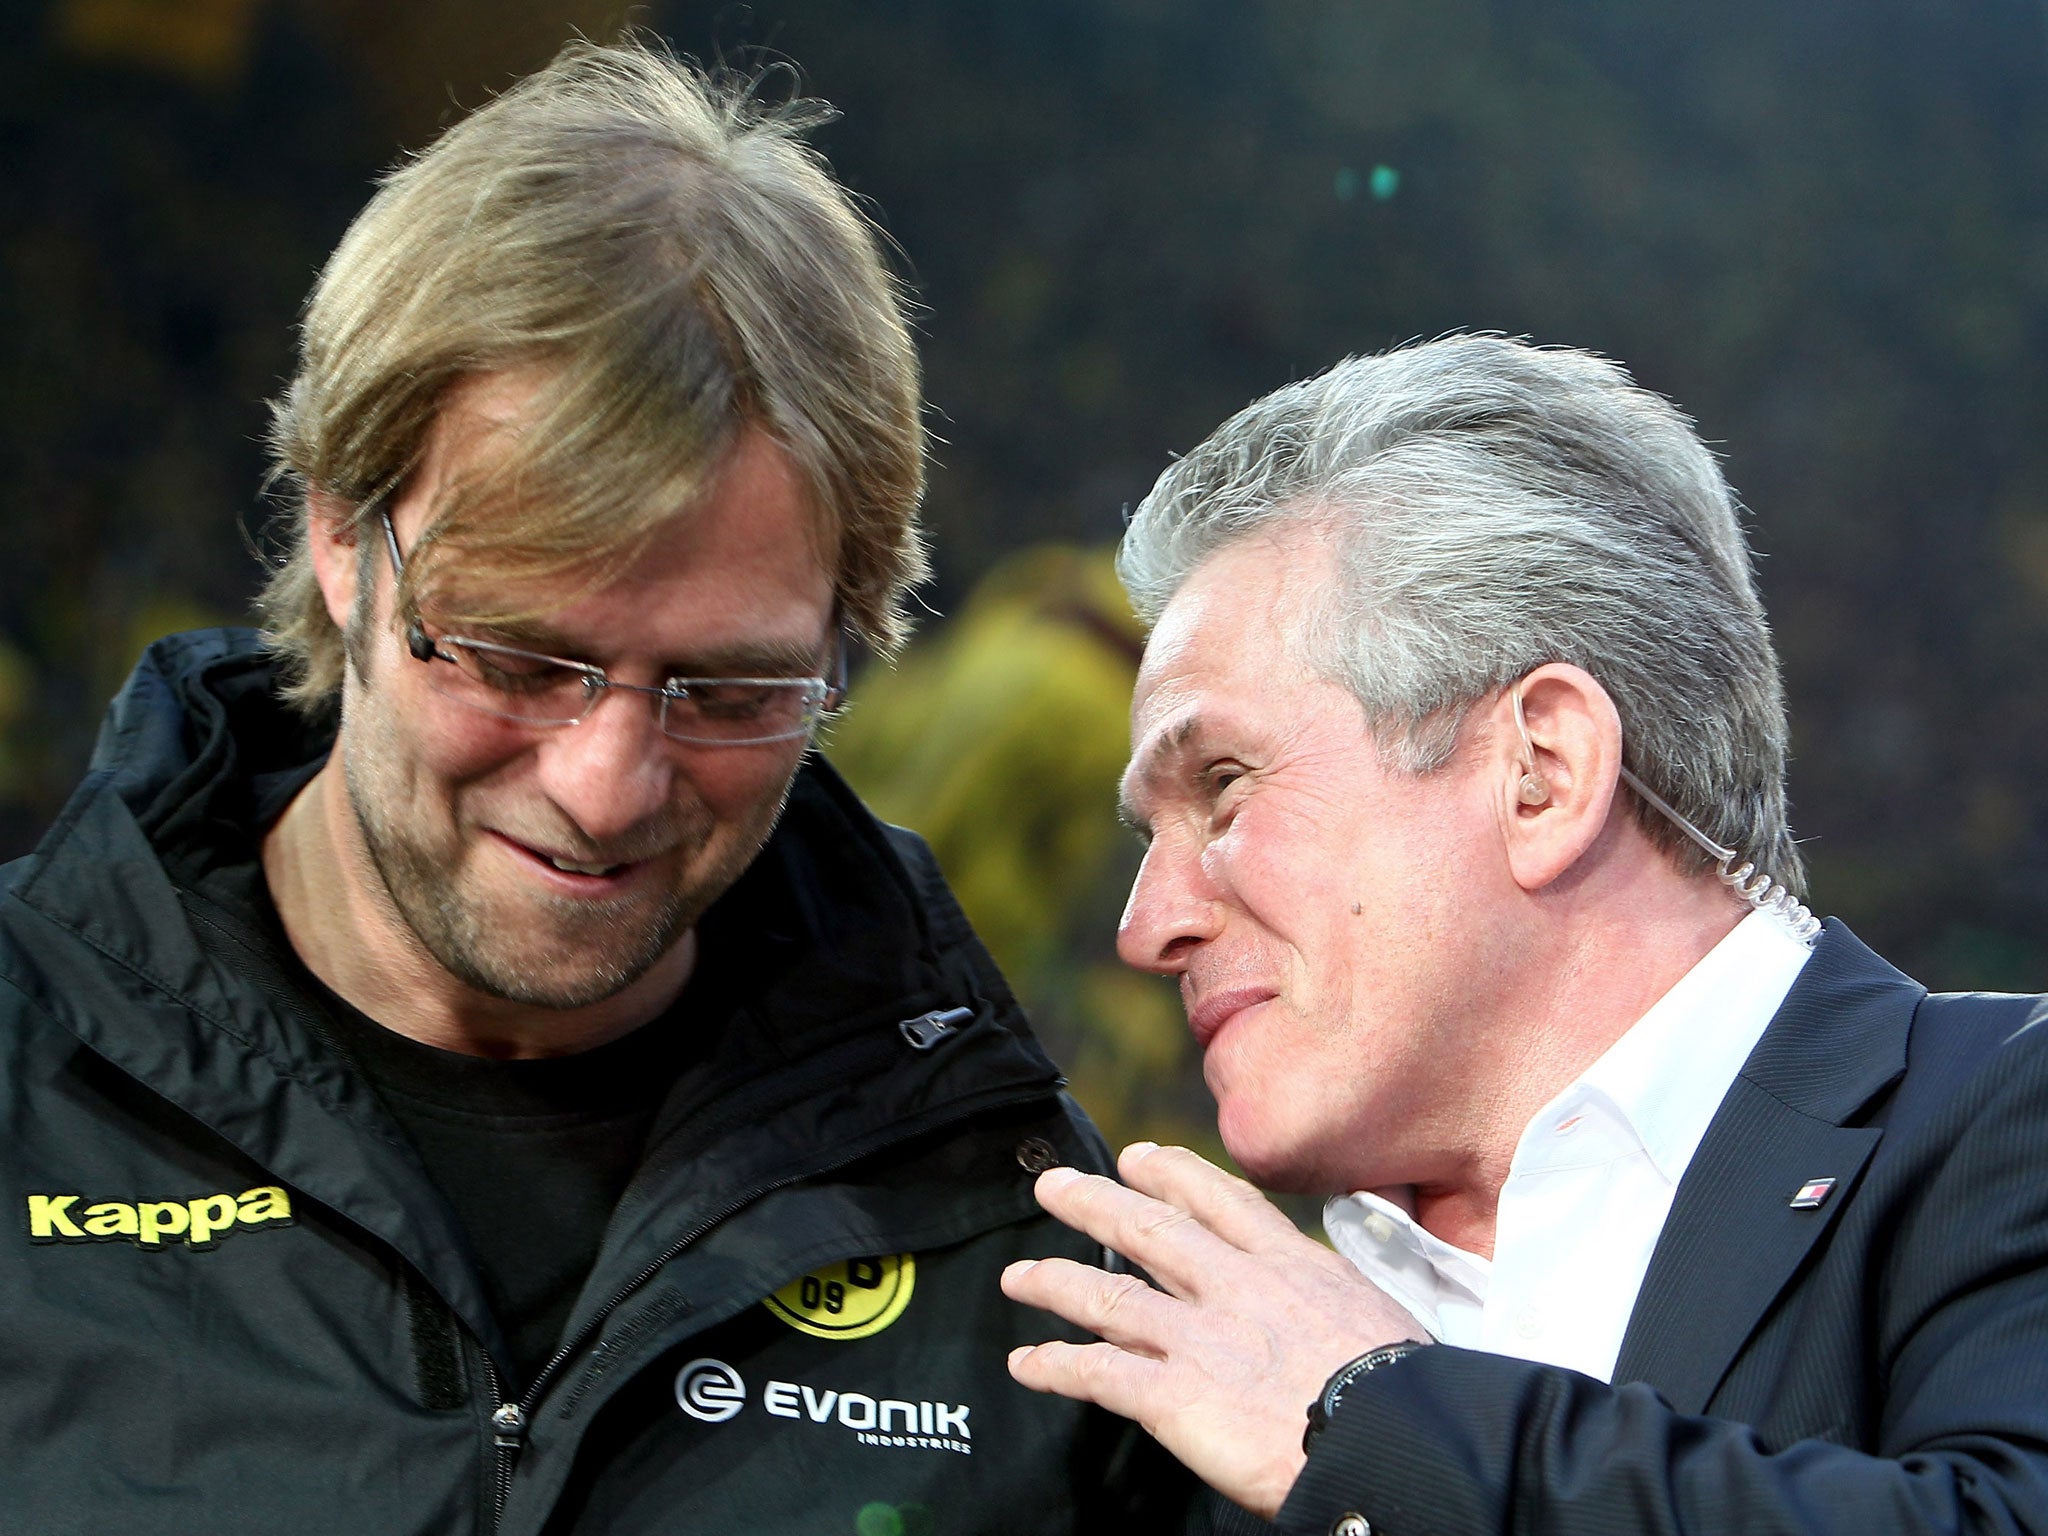 The last laugh: Bayern Munich’s manager, Jupp Heynckes (right), shares a joke with Dortmund’s Jürgen Klopp